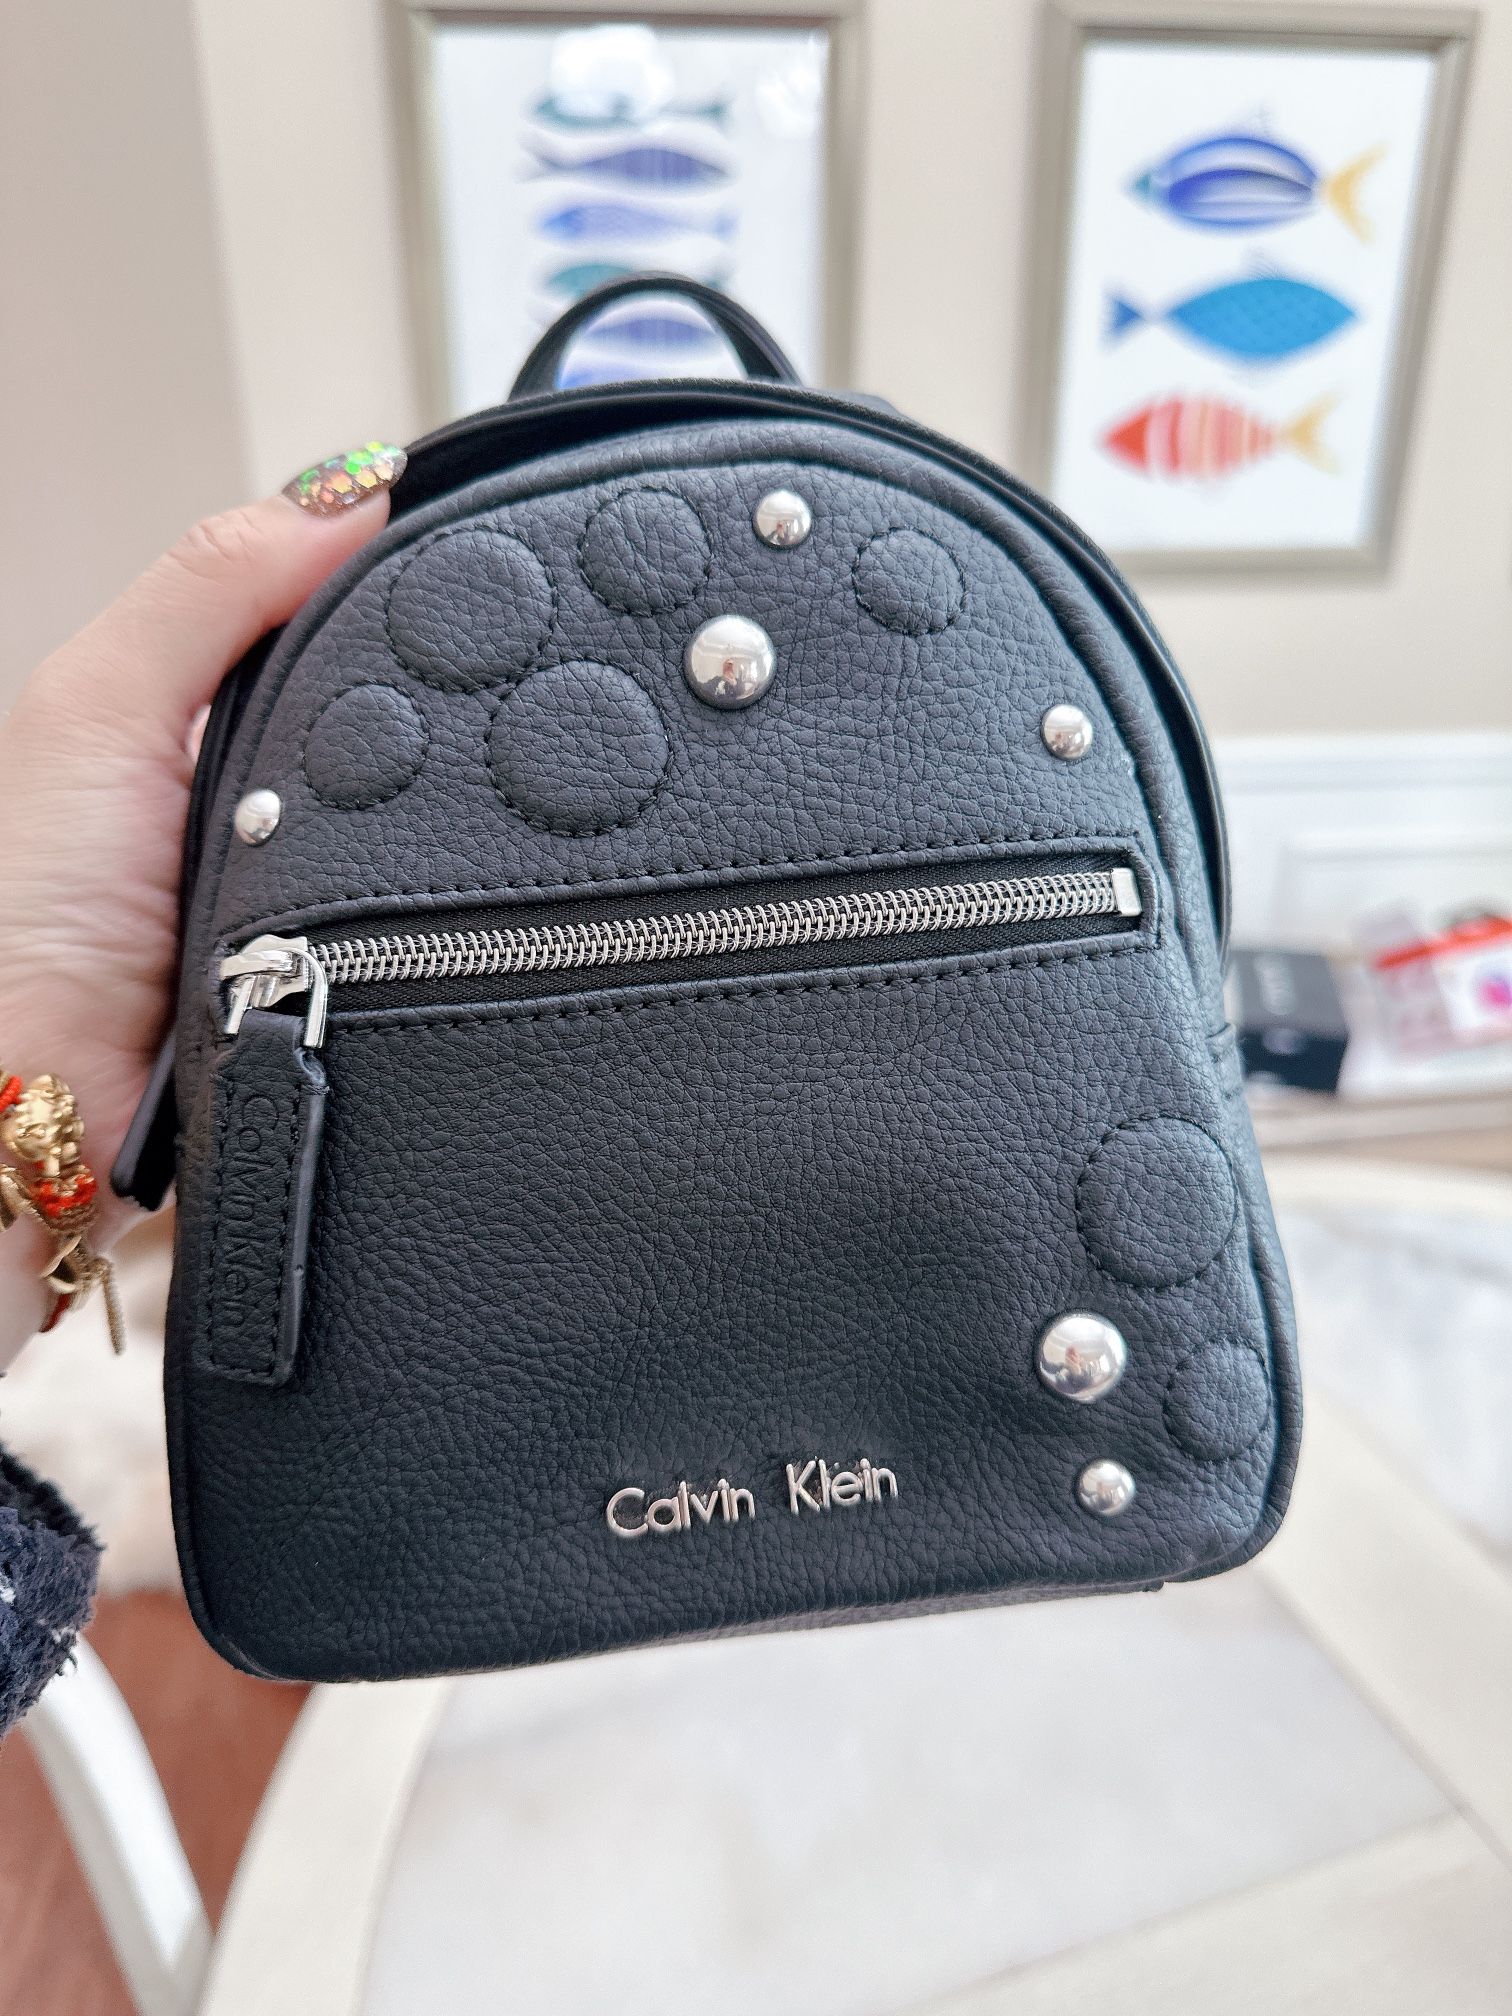 Calvin Klein crossbody bag /backpack 2 in 1 /NWT